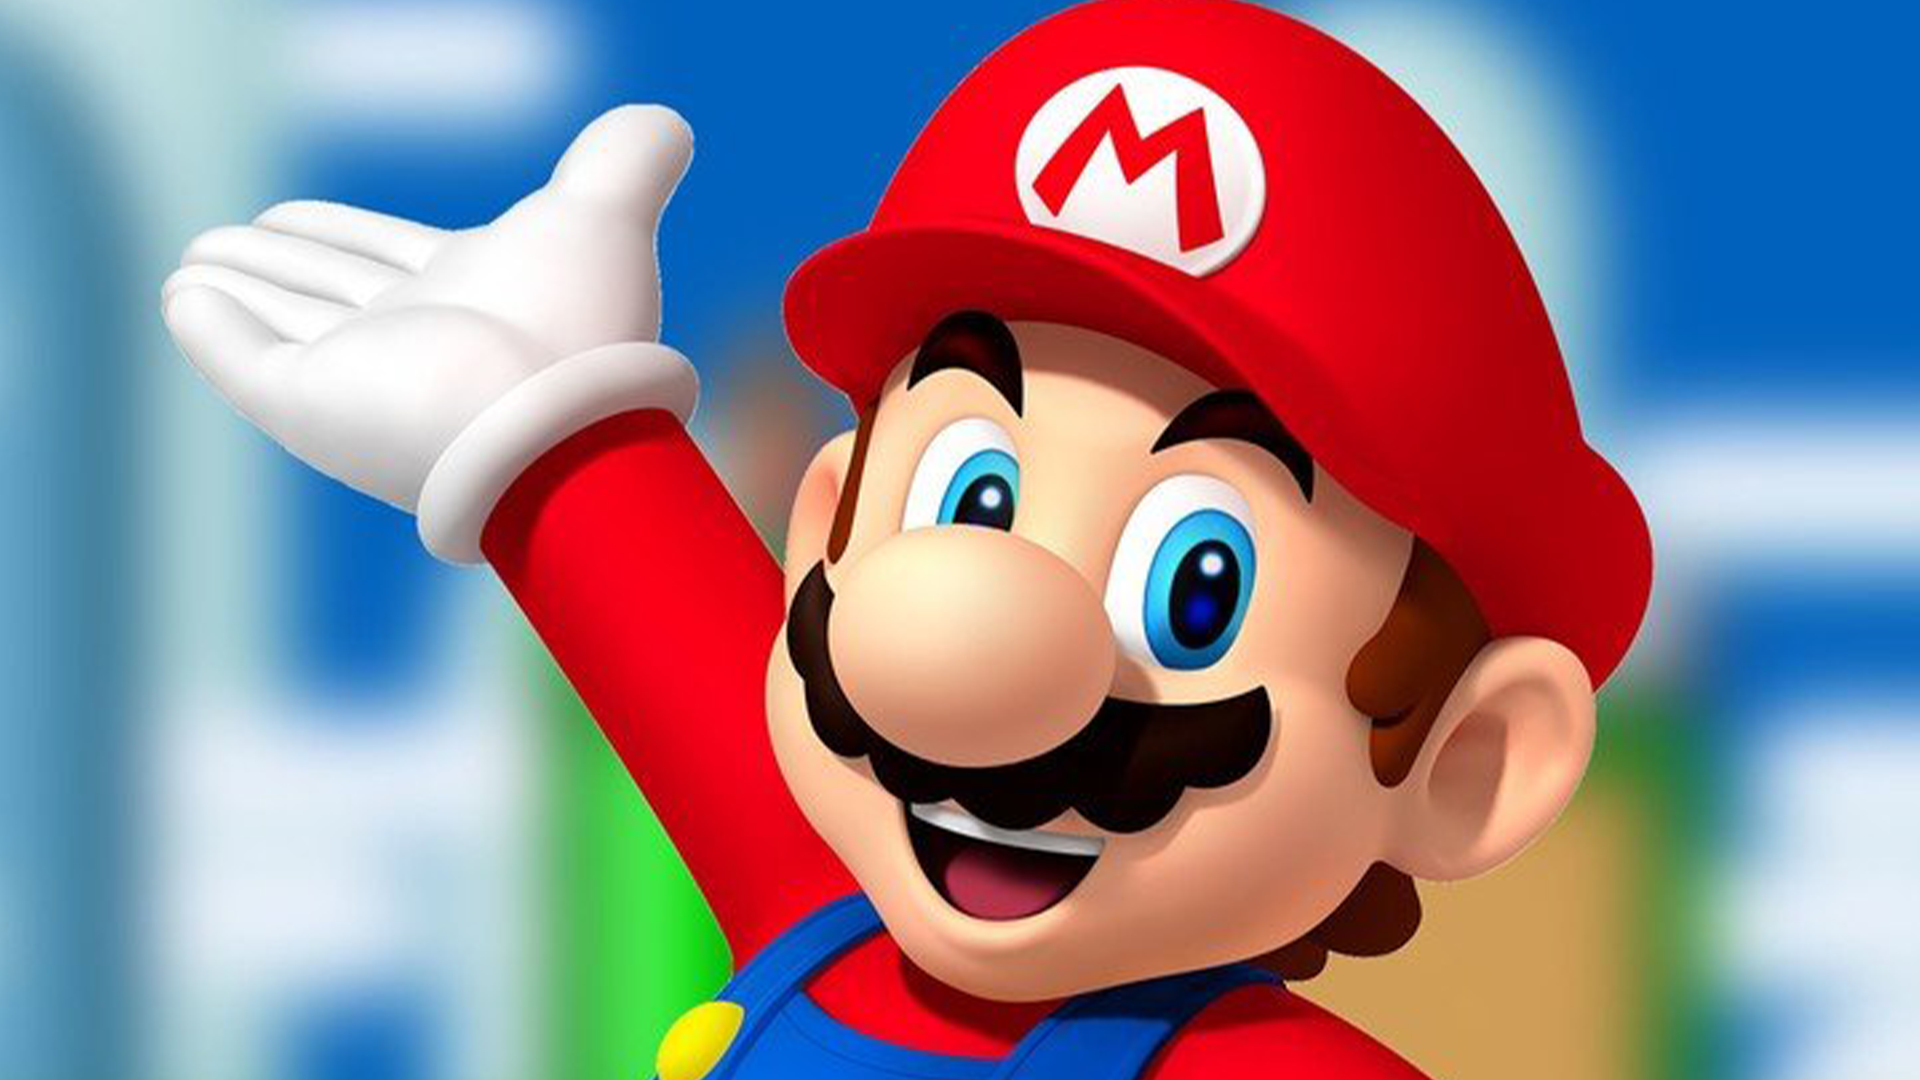 Mario from Super Mario 